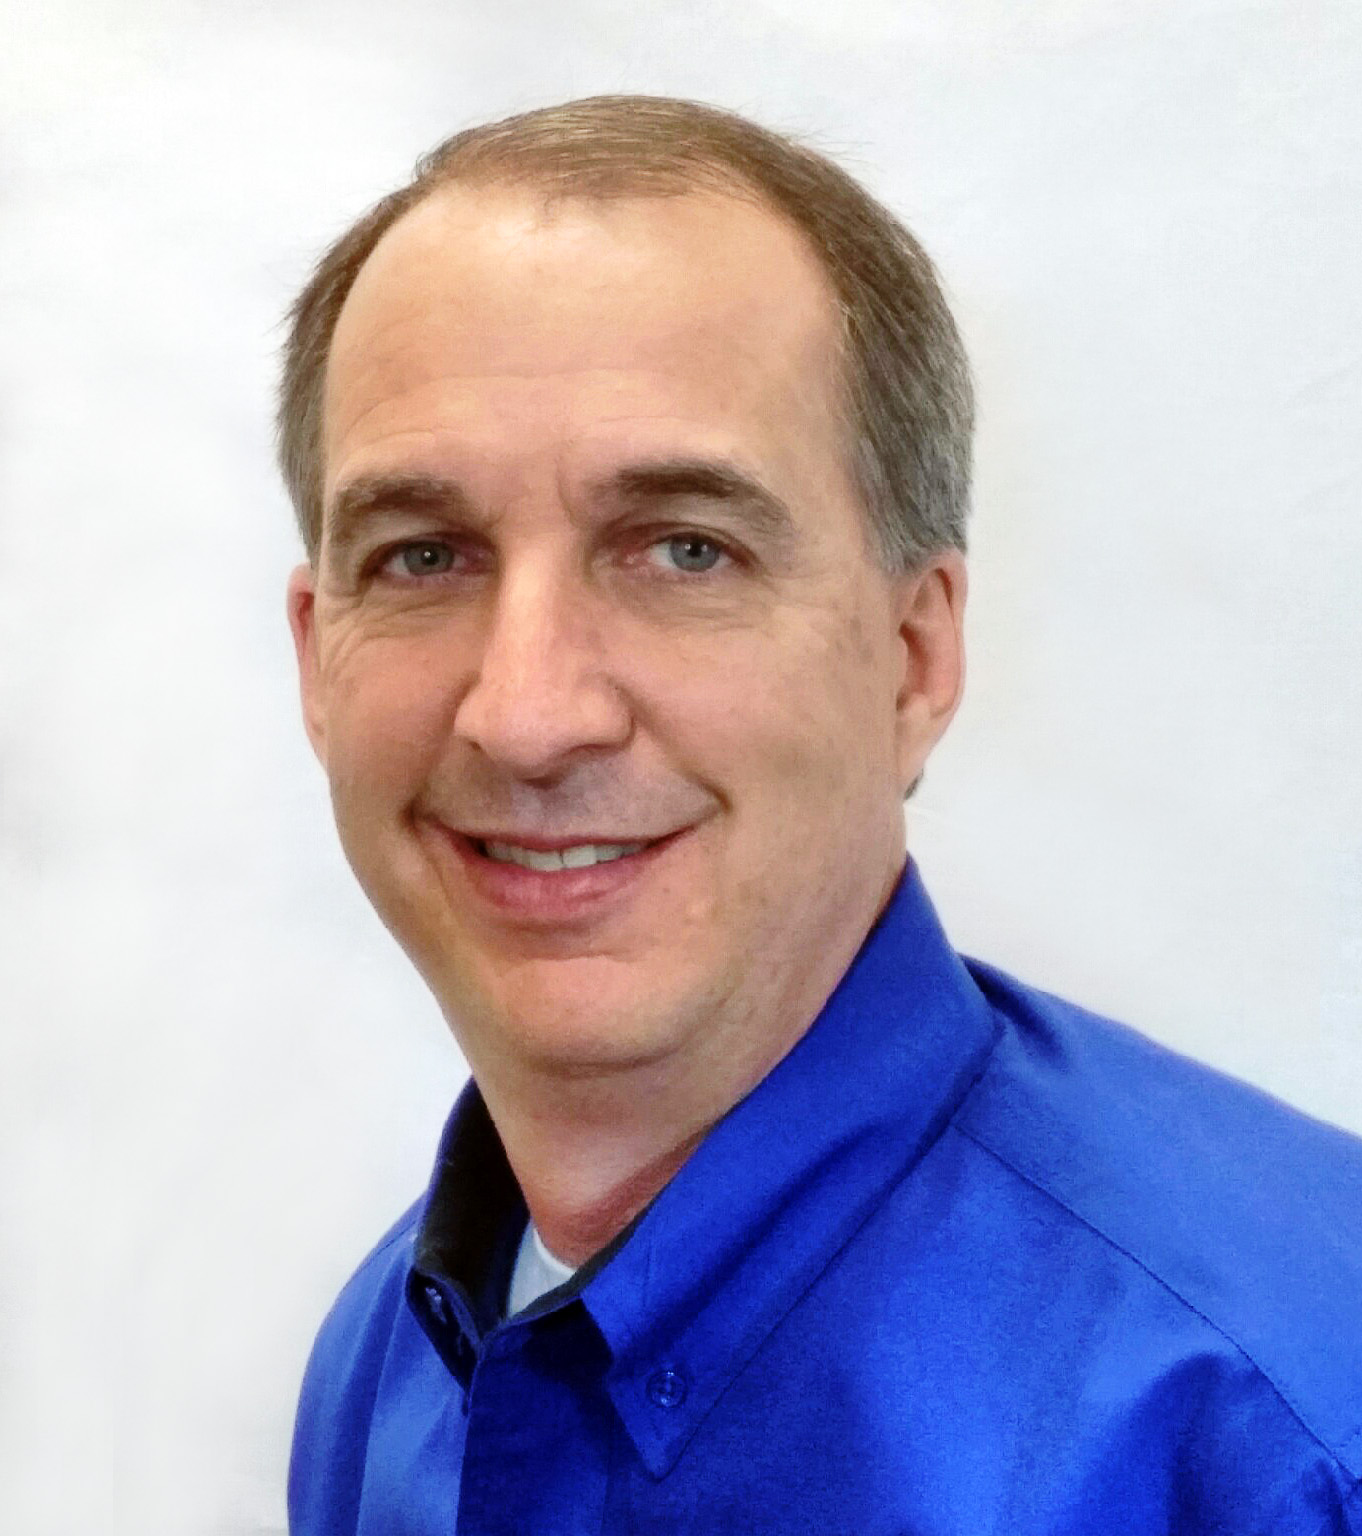 Bill Helton - Director of Franchise Development, Steamatic, Inc.